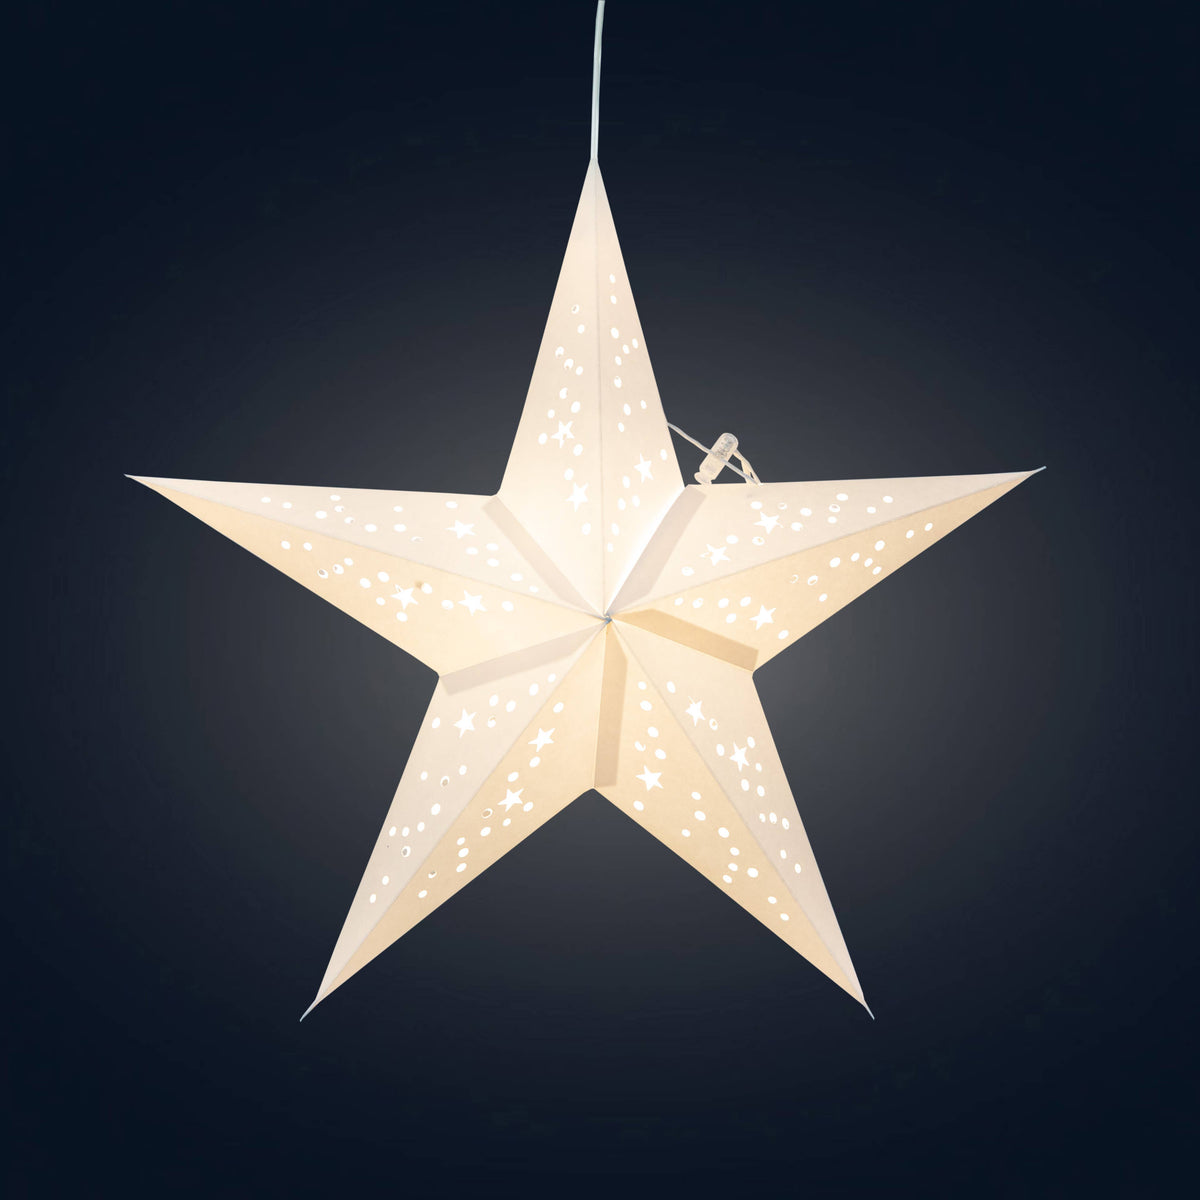 STAR Twinkle Star ~ 5 P, 15", White Paper Star Lantern Light